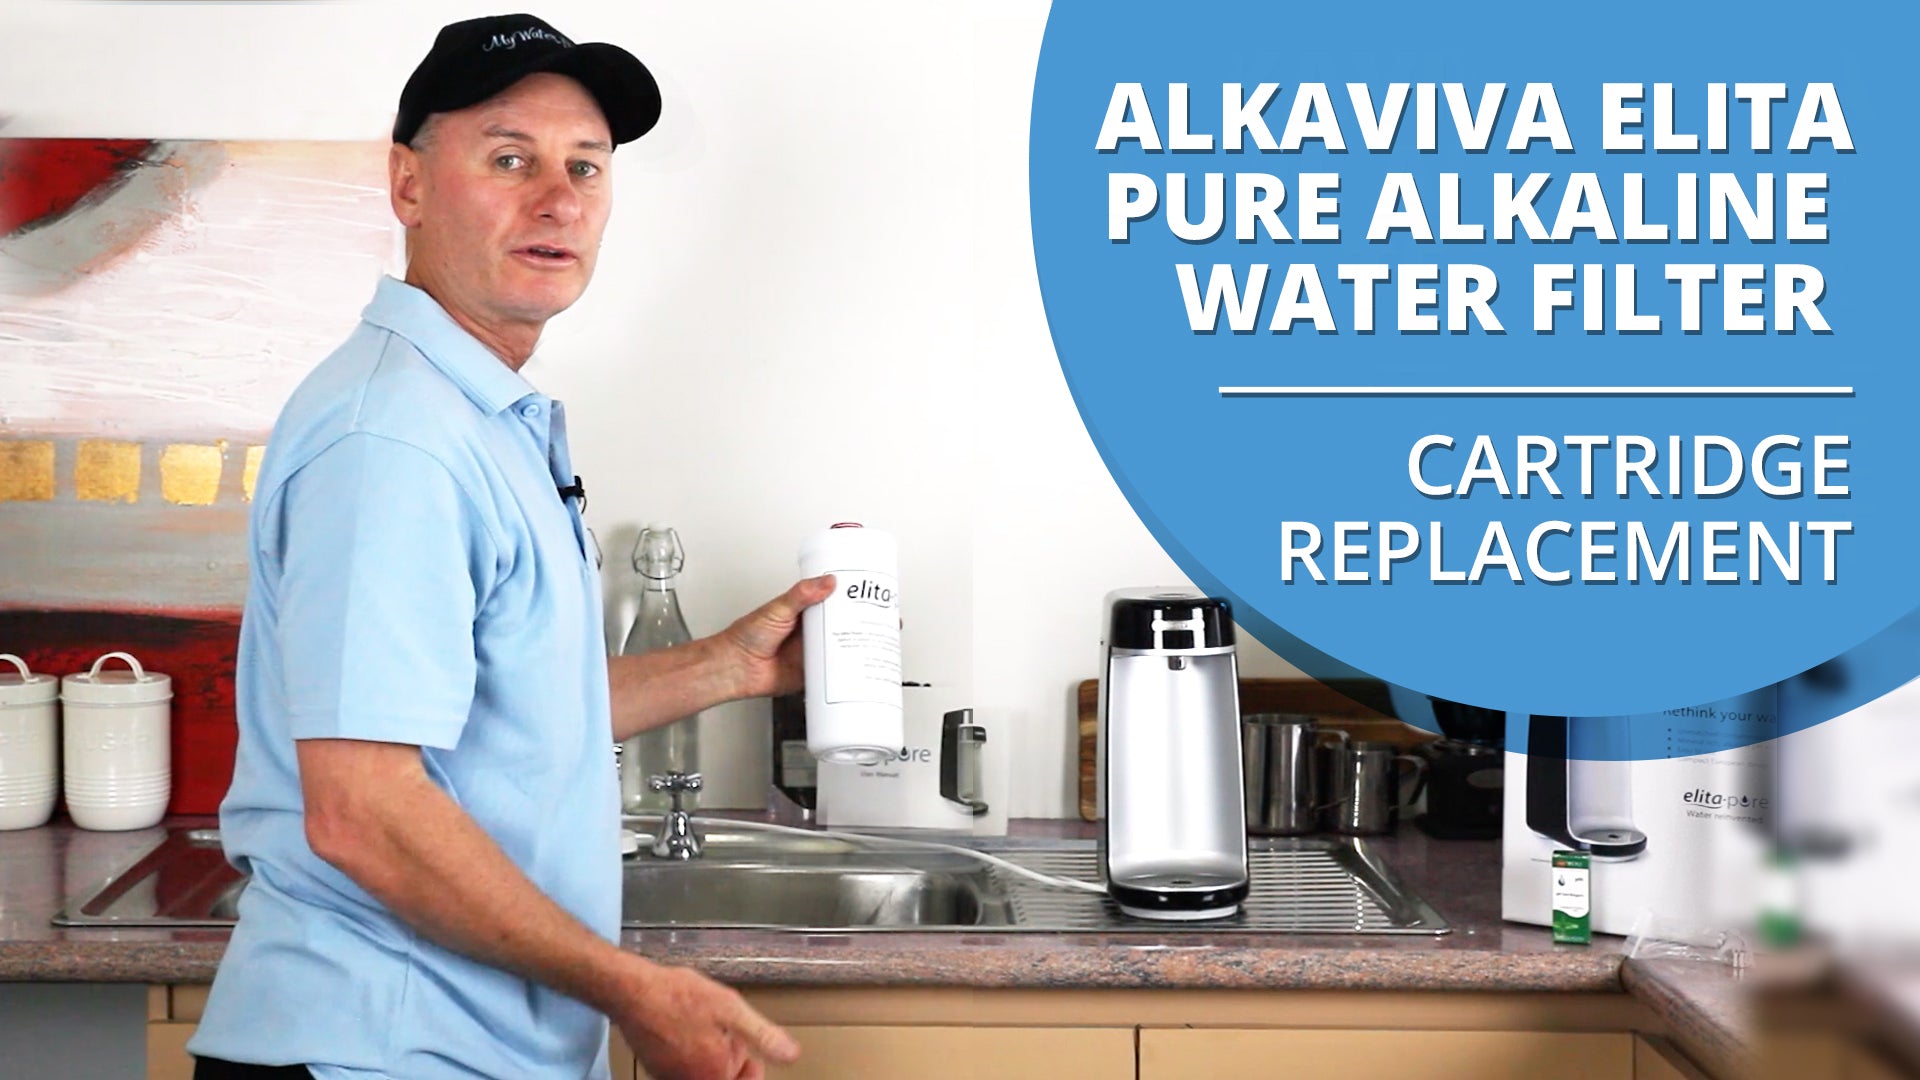 [VIDEO] Alkaviva Elita Pure Alkaline Water Filter - Cartridge Replacement Guide